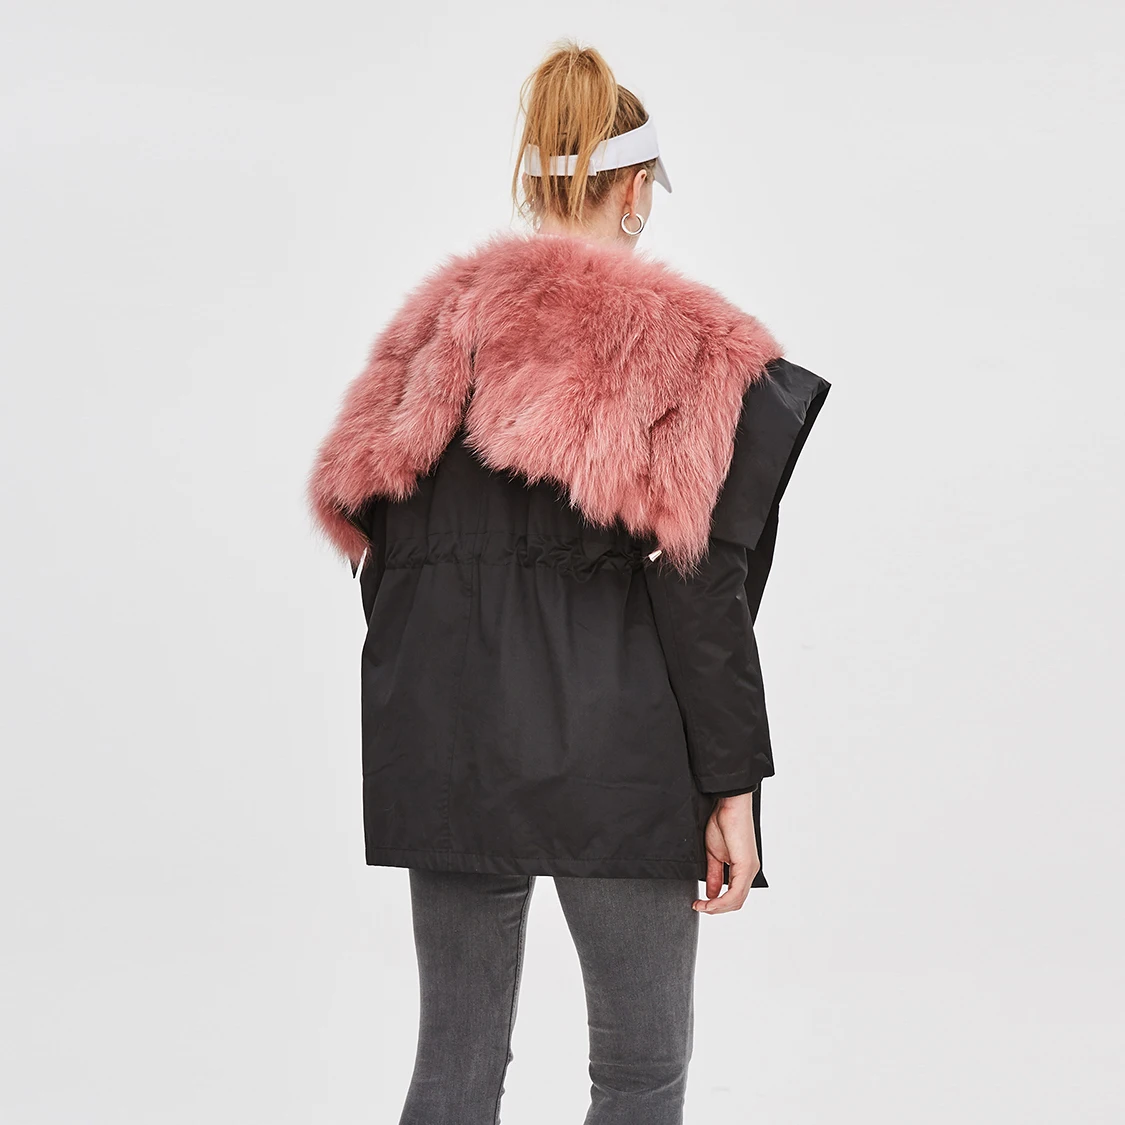 JAZZEVAR 2019 New Winter High Fashion street Women Luxurious fox Fur Parka detachable Real Fur lining Jacket Ladies Hooded Coat enlarge